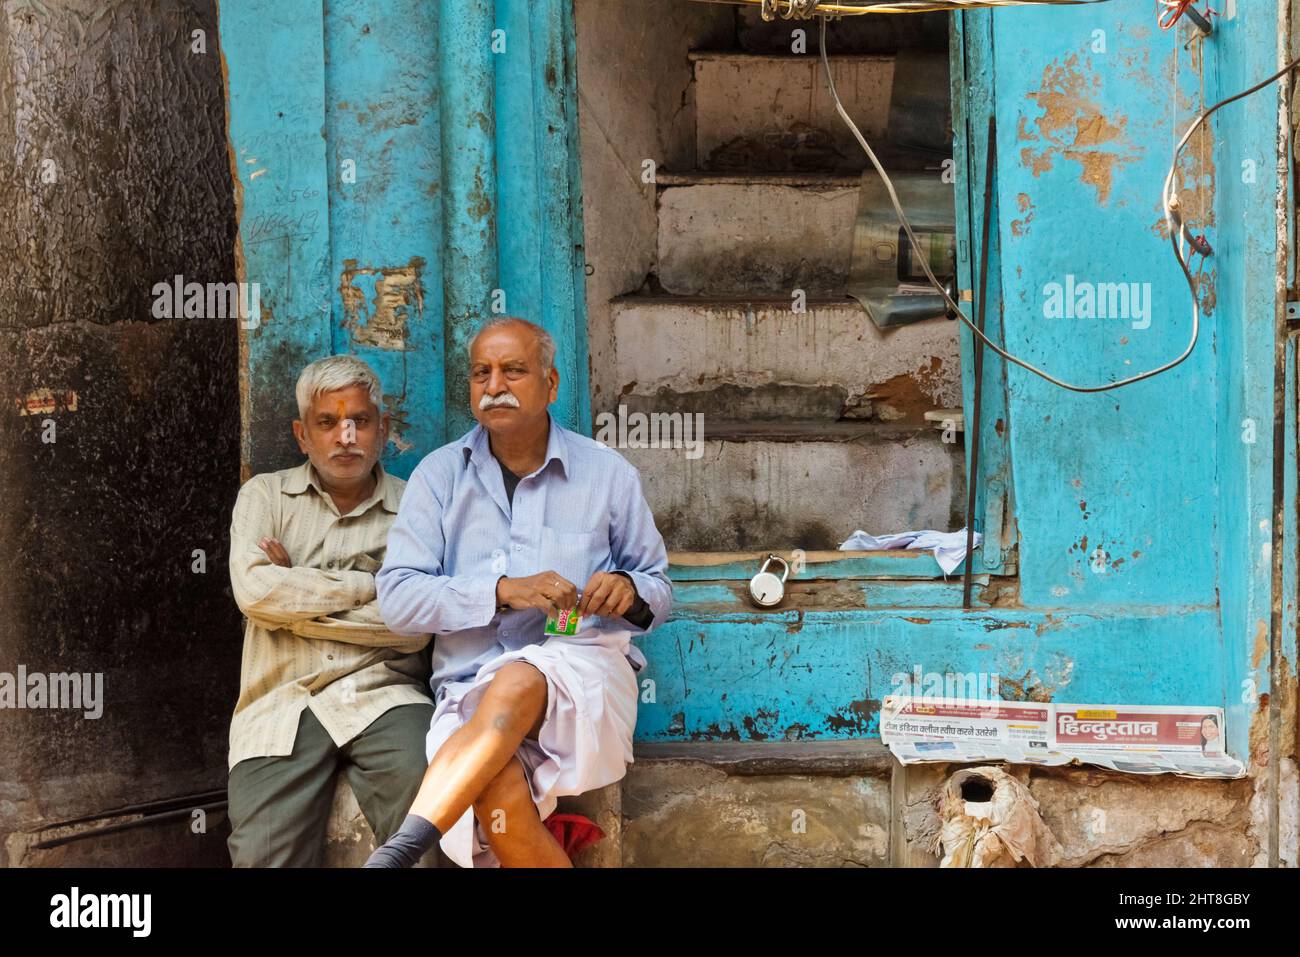 Old men sitting on the street, Chandni Chowk (Moonlight Square), Delhi, India Stock Photo